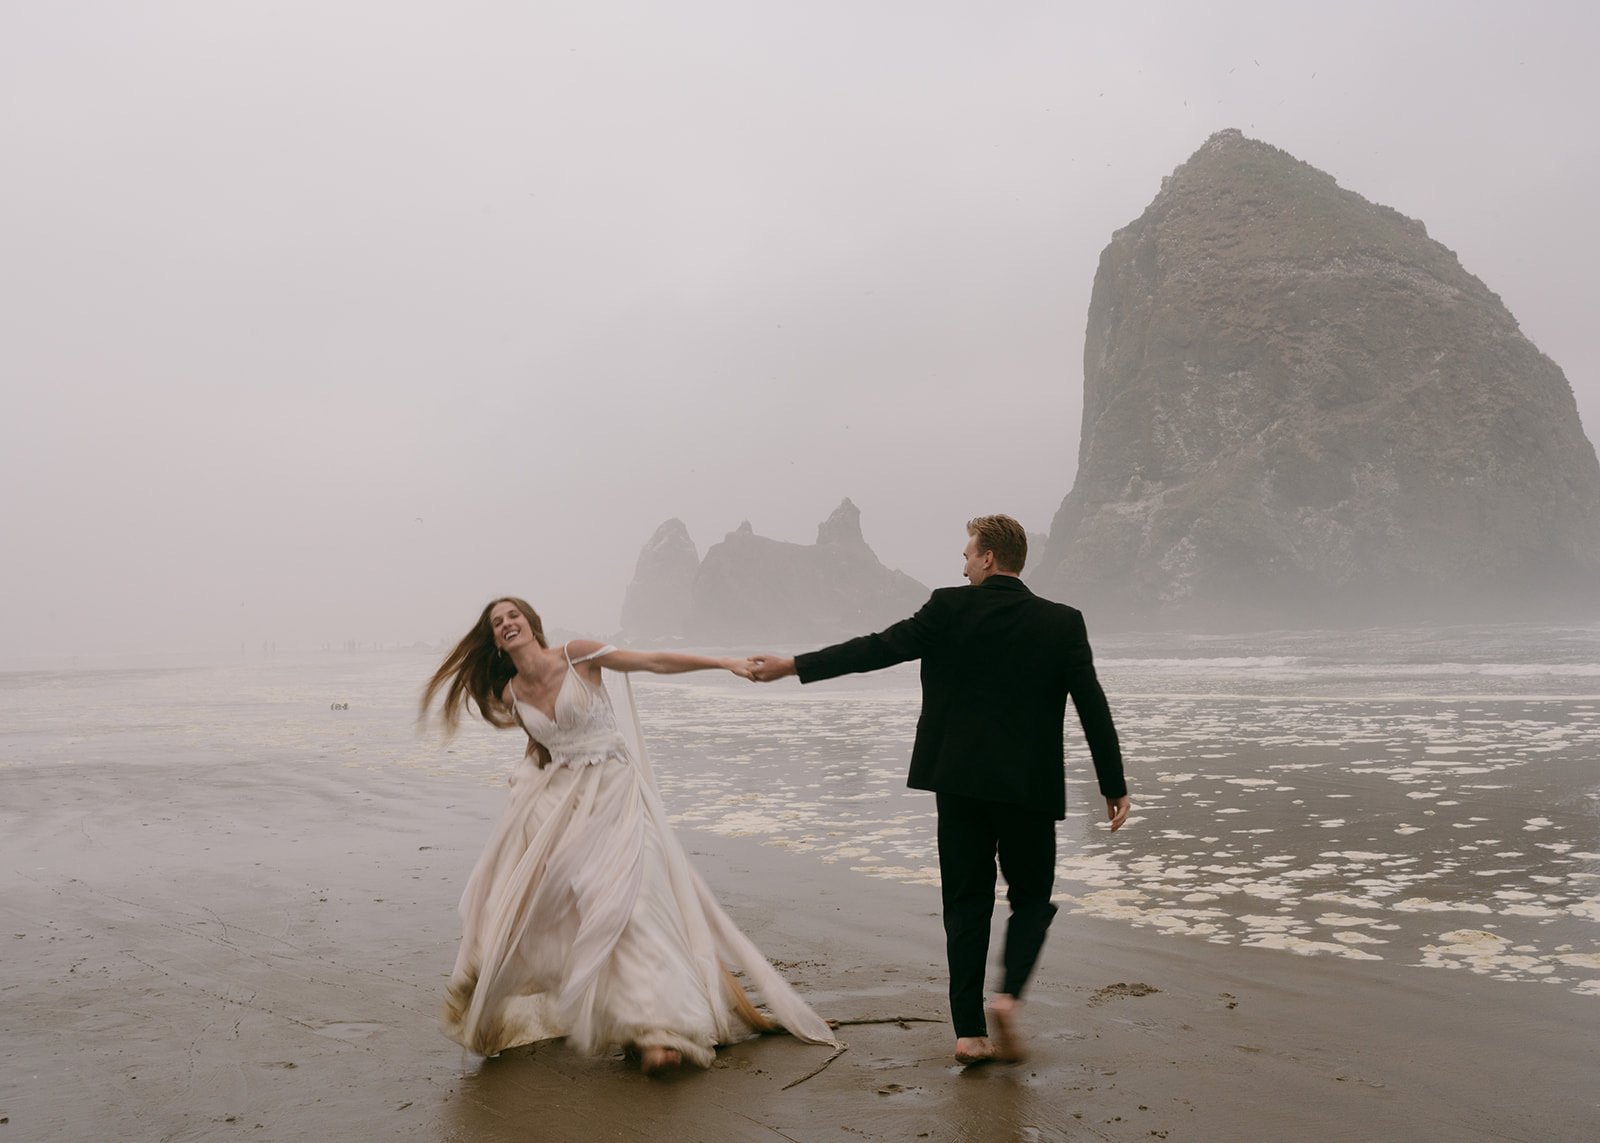   Heidi wedding dress . Elopement in Cannon Beach, Oregon Coast. Photo by  Macayla Lott Photo .  